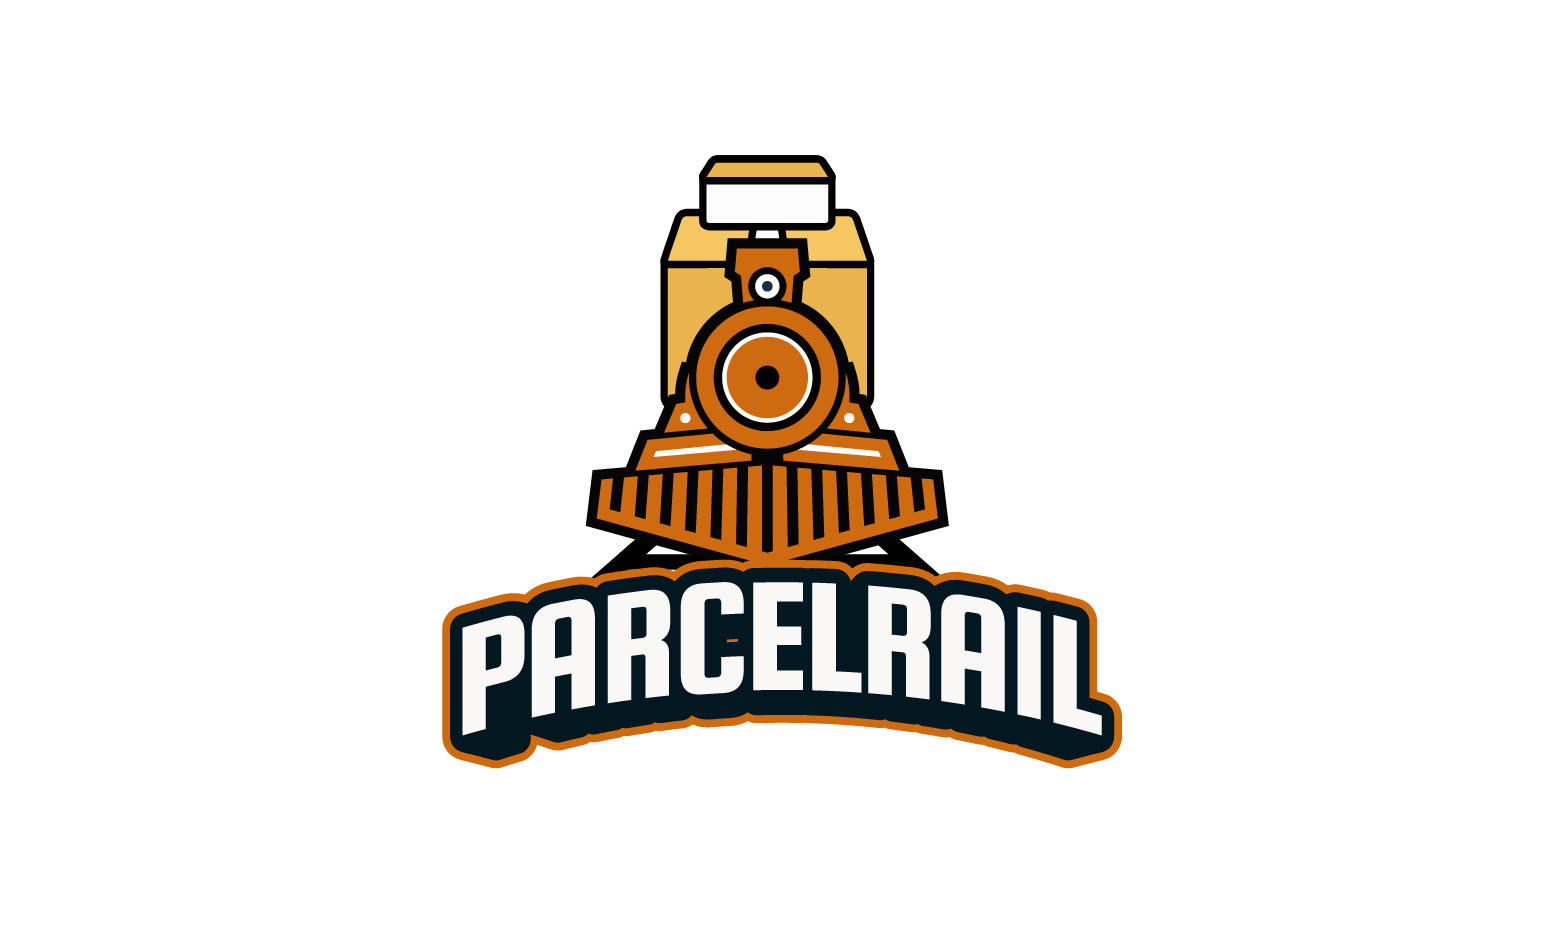 ParcelRail.com - Creative brandable domain for sale